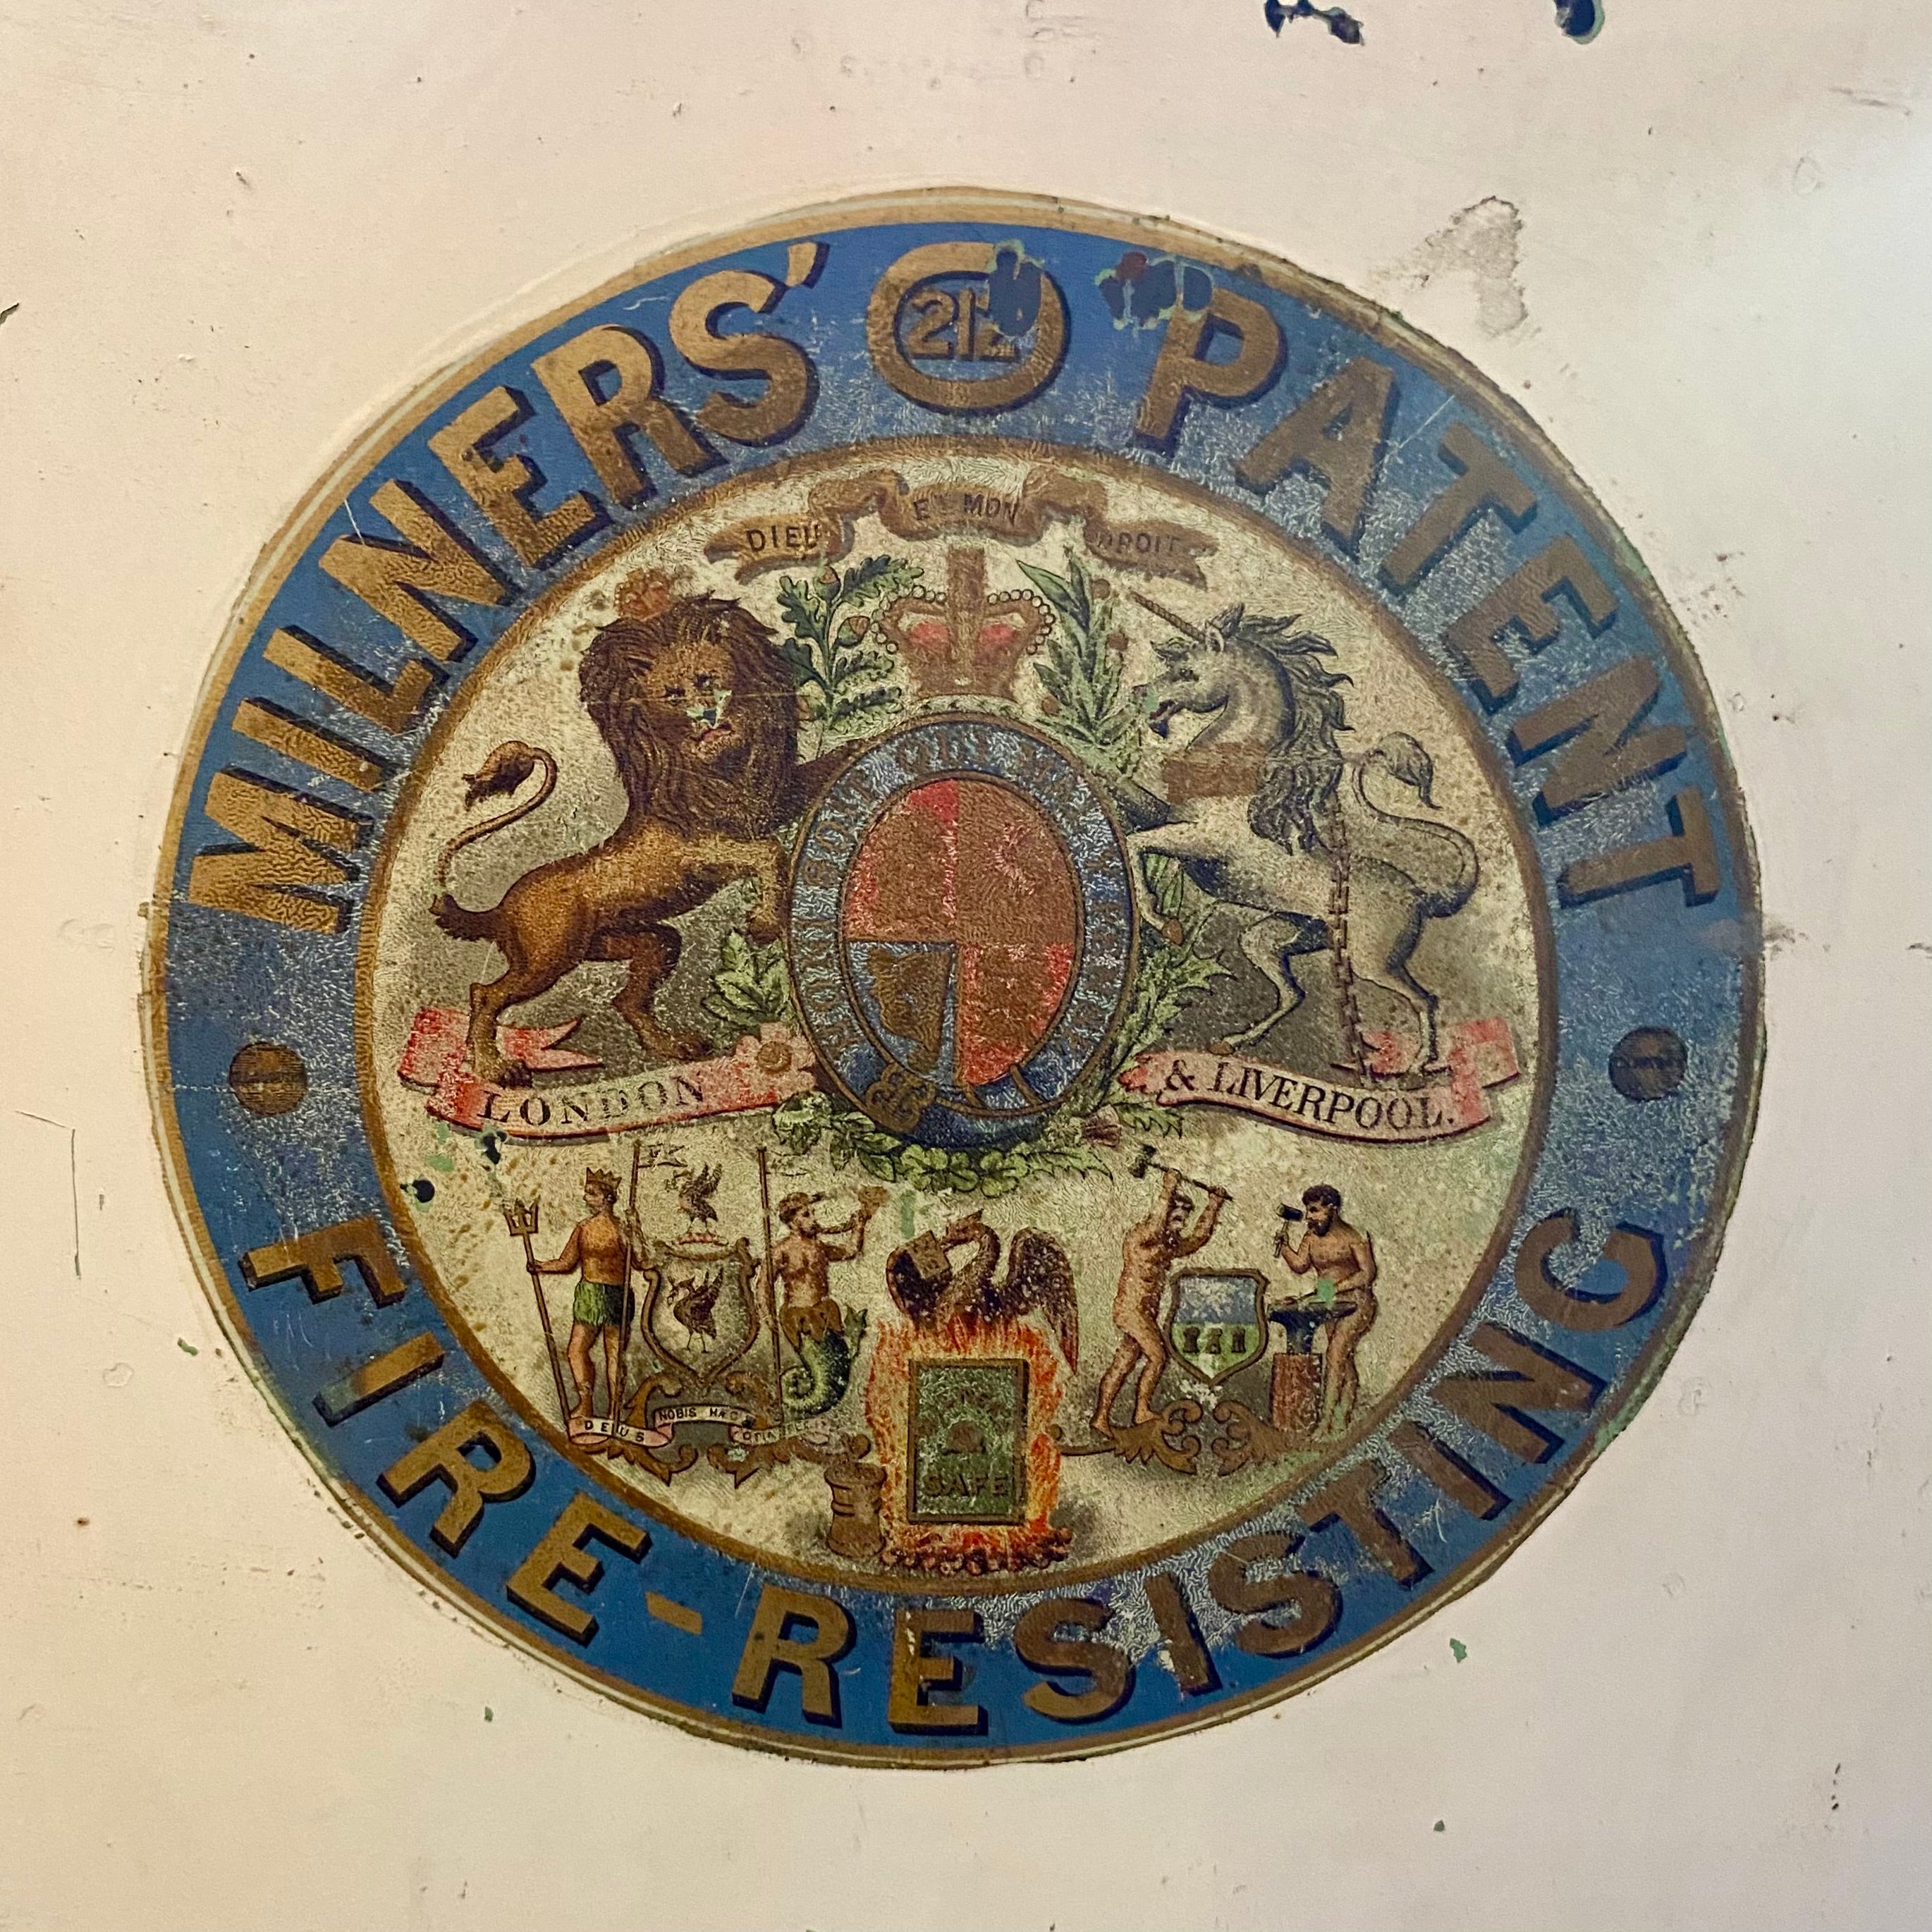 Antique "Milner's Patent" Safe